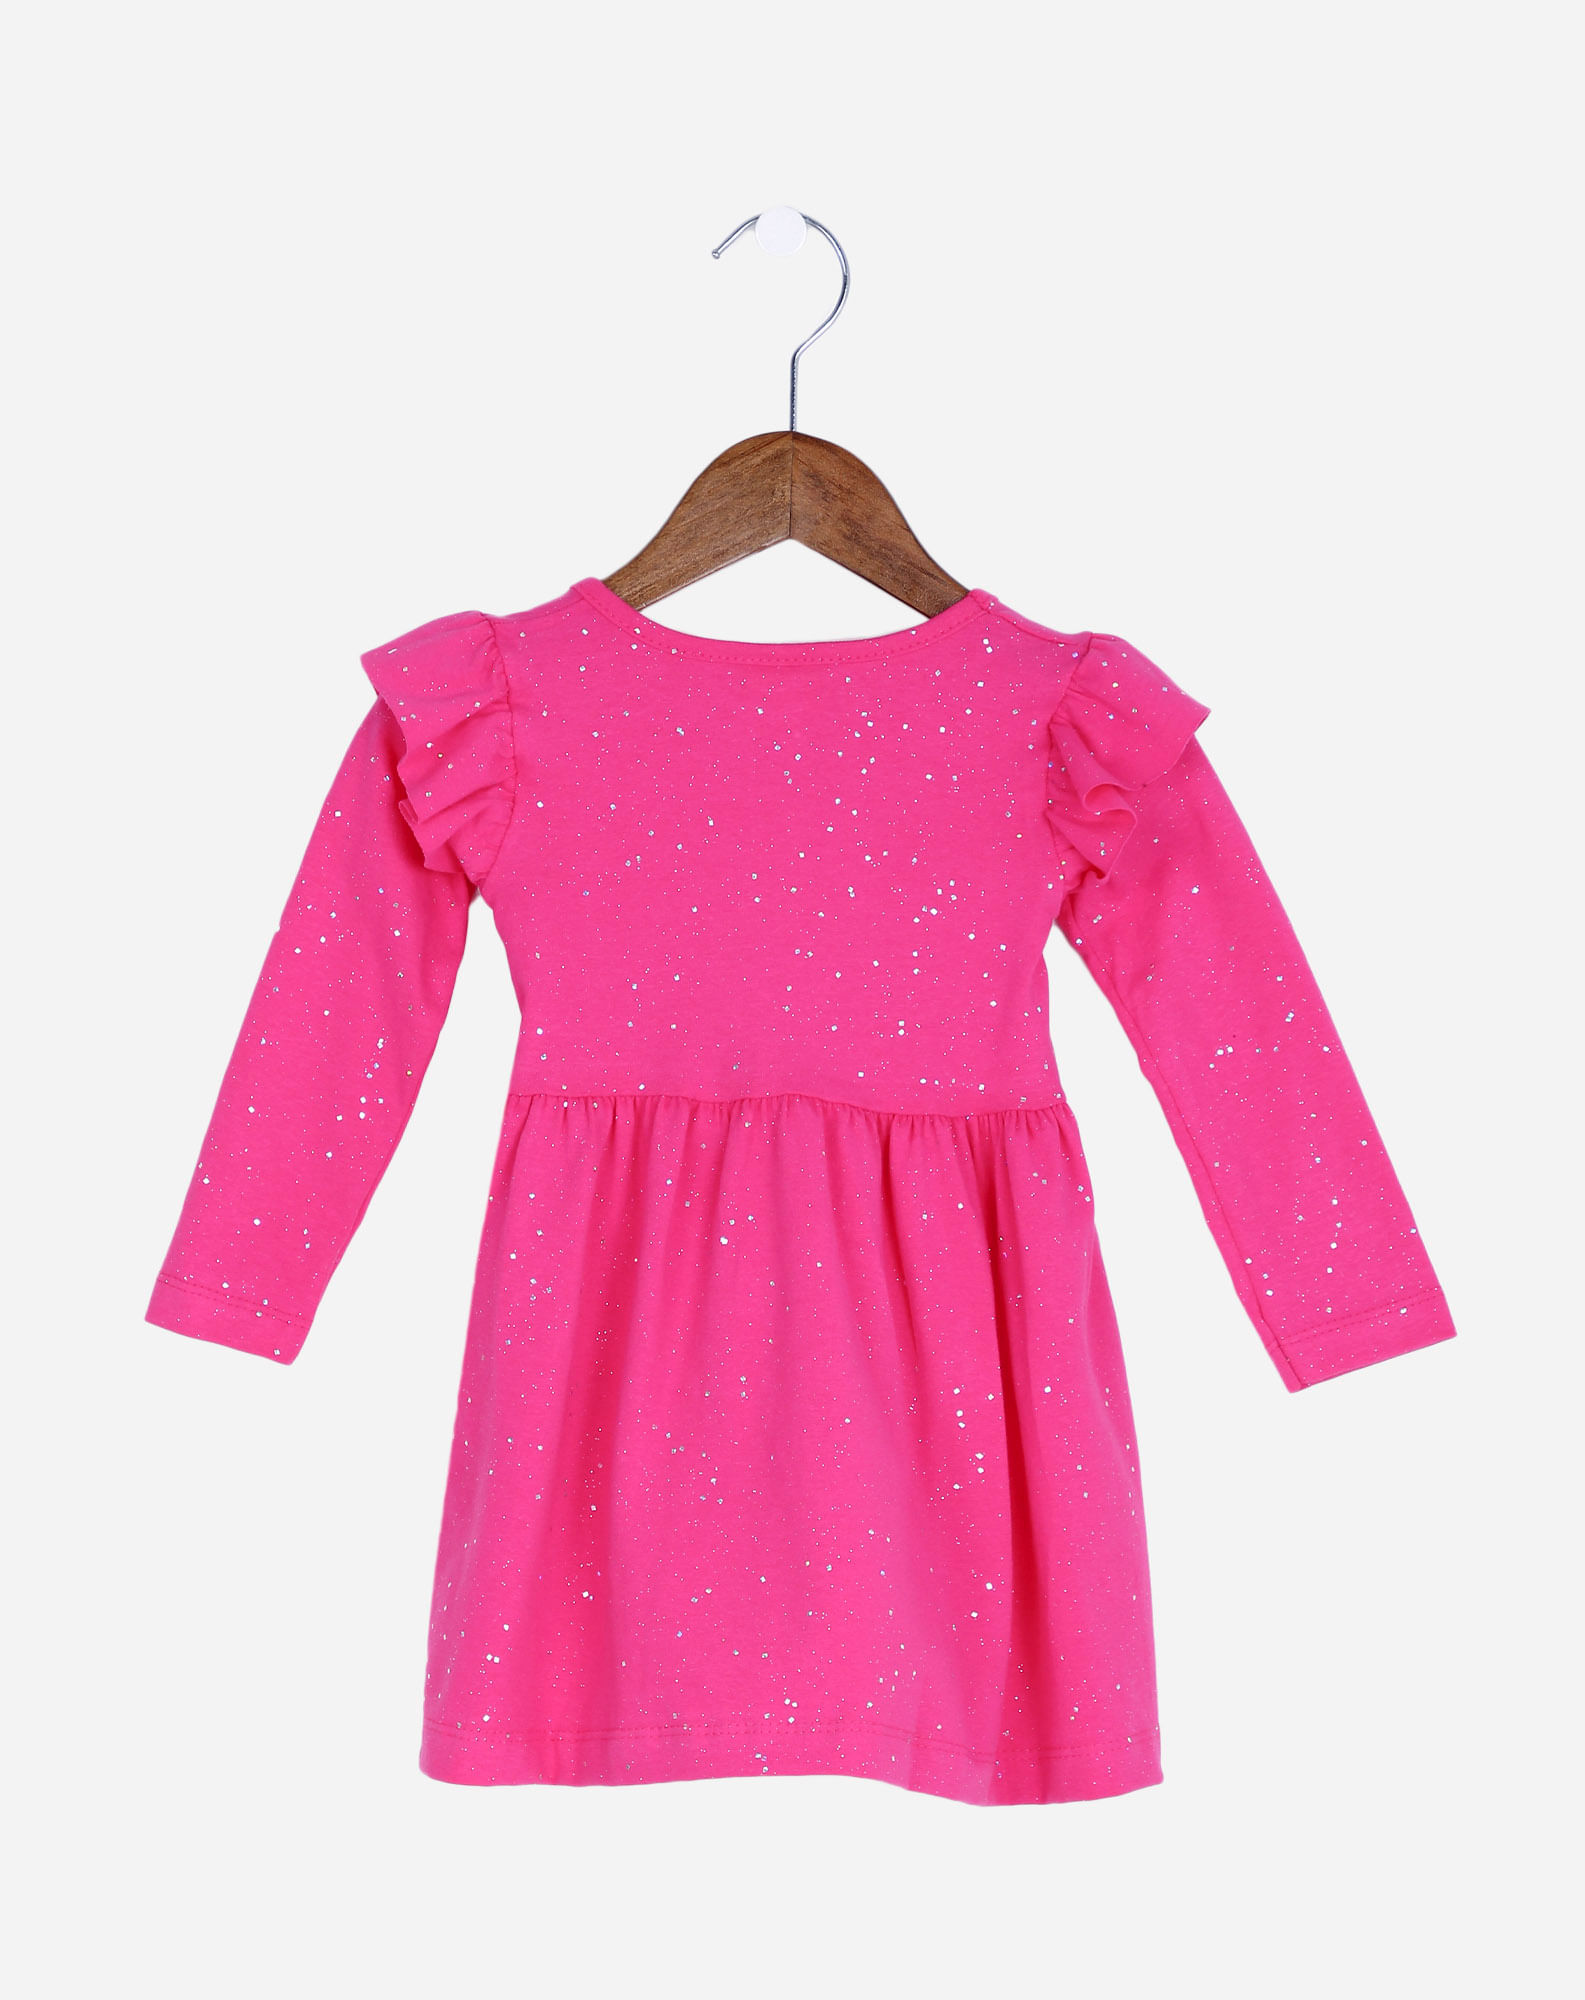 699127002 vestido infantil menina alça babados - tam. 1 à 3 anos pink 2 f97